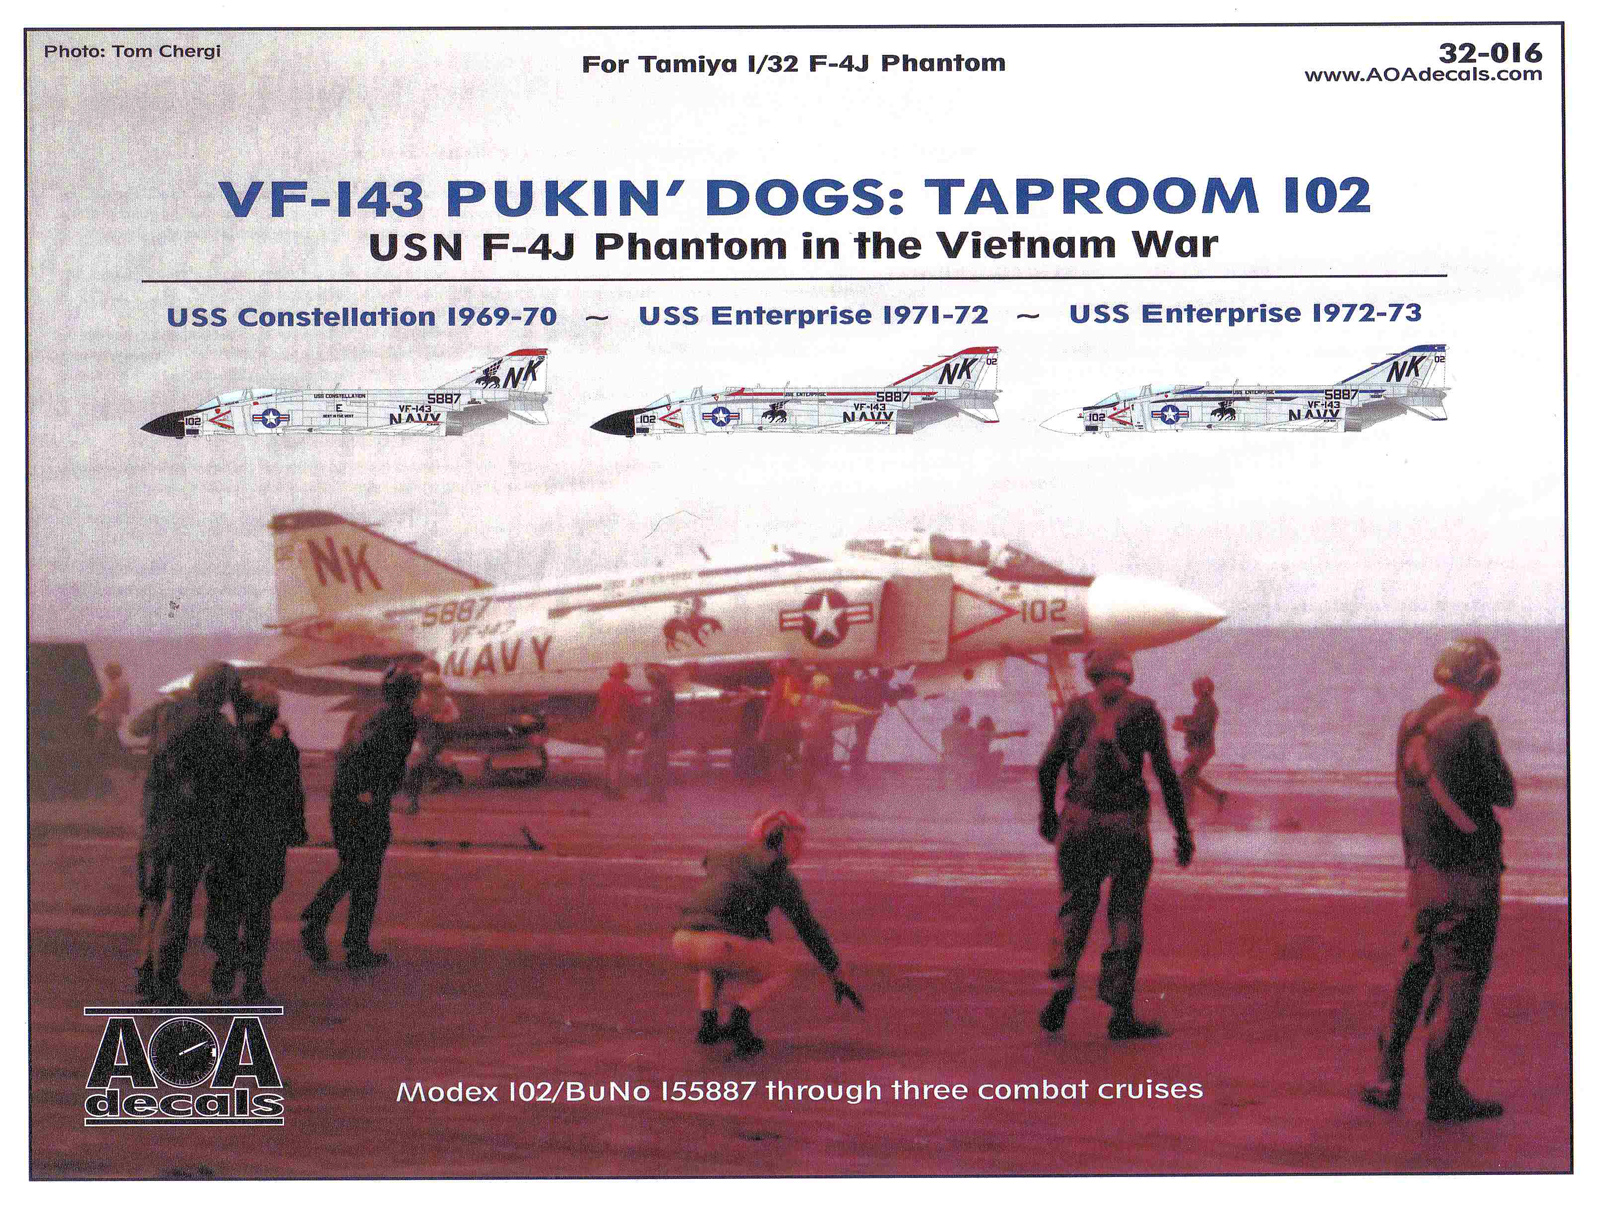 USN F-4J Phantom in Vietnam War AOA decals 1/32 VF-143 PUKIN' DOGS TAPROOM 102 